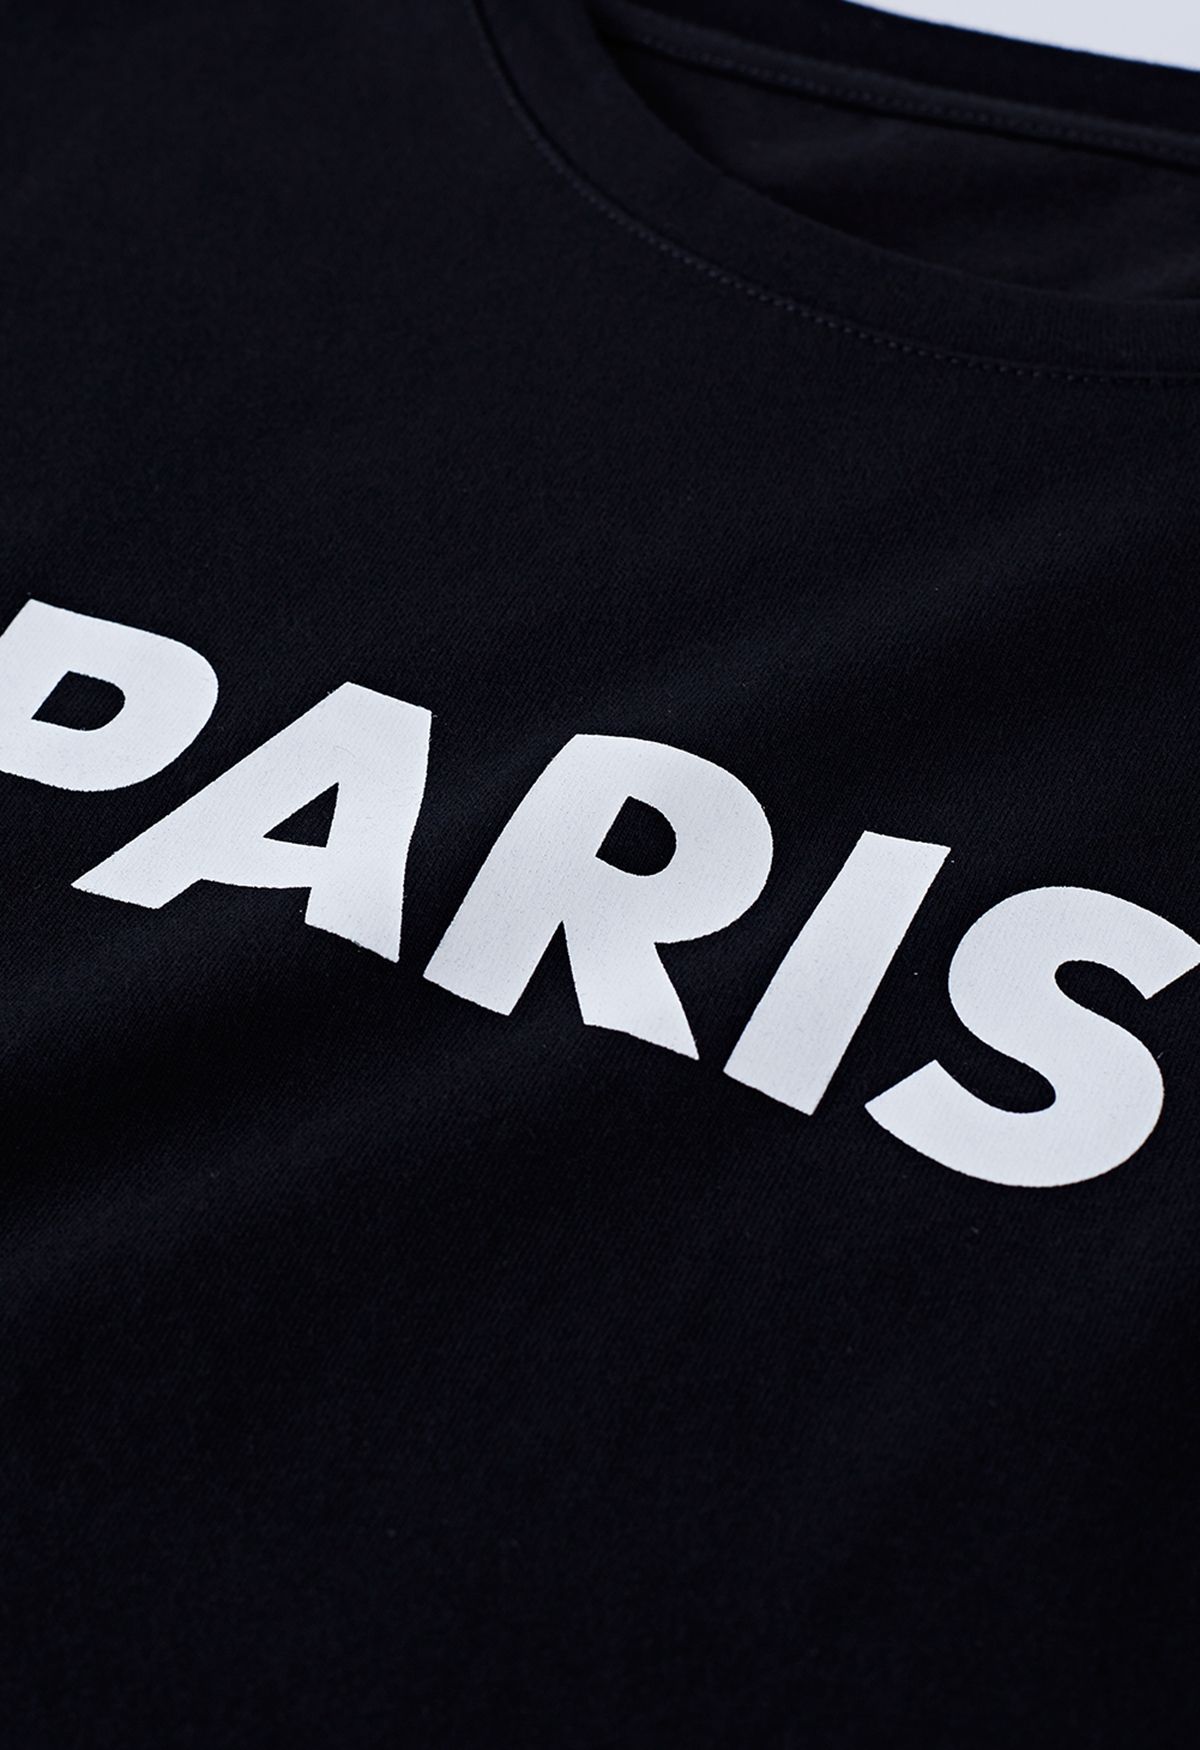 Paris Print Round Neck T-Shirt in Black - Retro, Indie and Unique Fashion